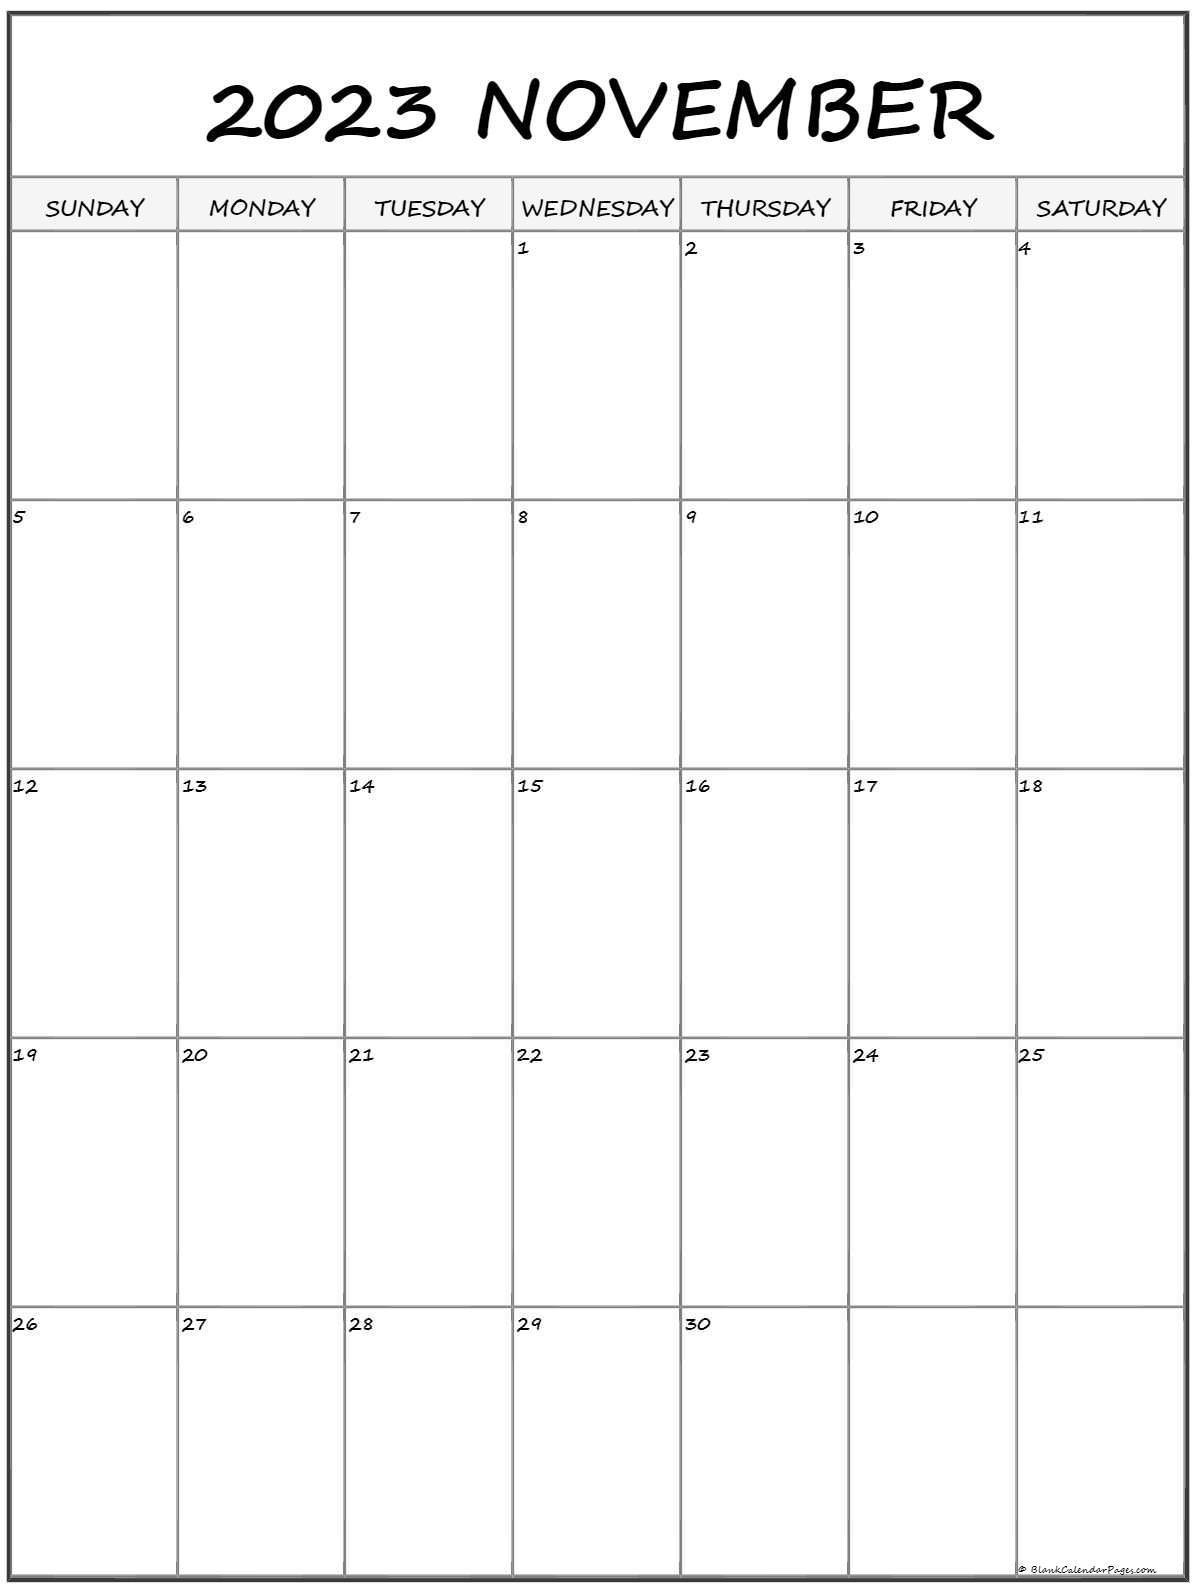 november-2023-calendar-vertical-get-calender-2023-update